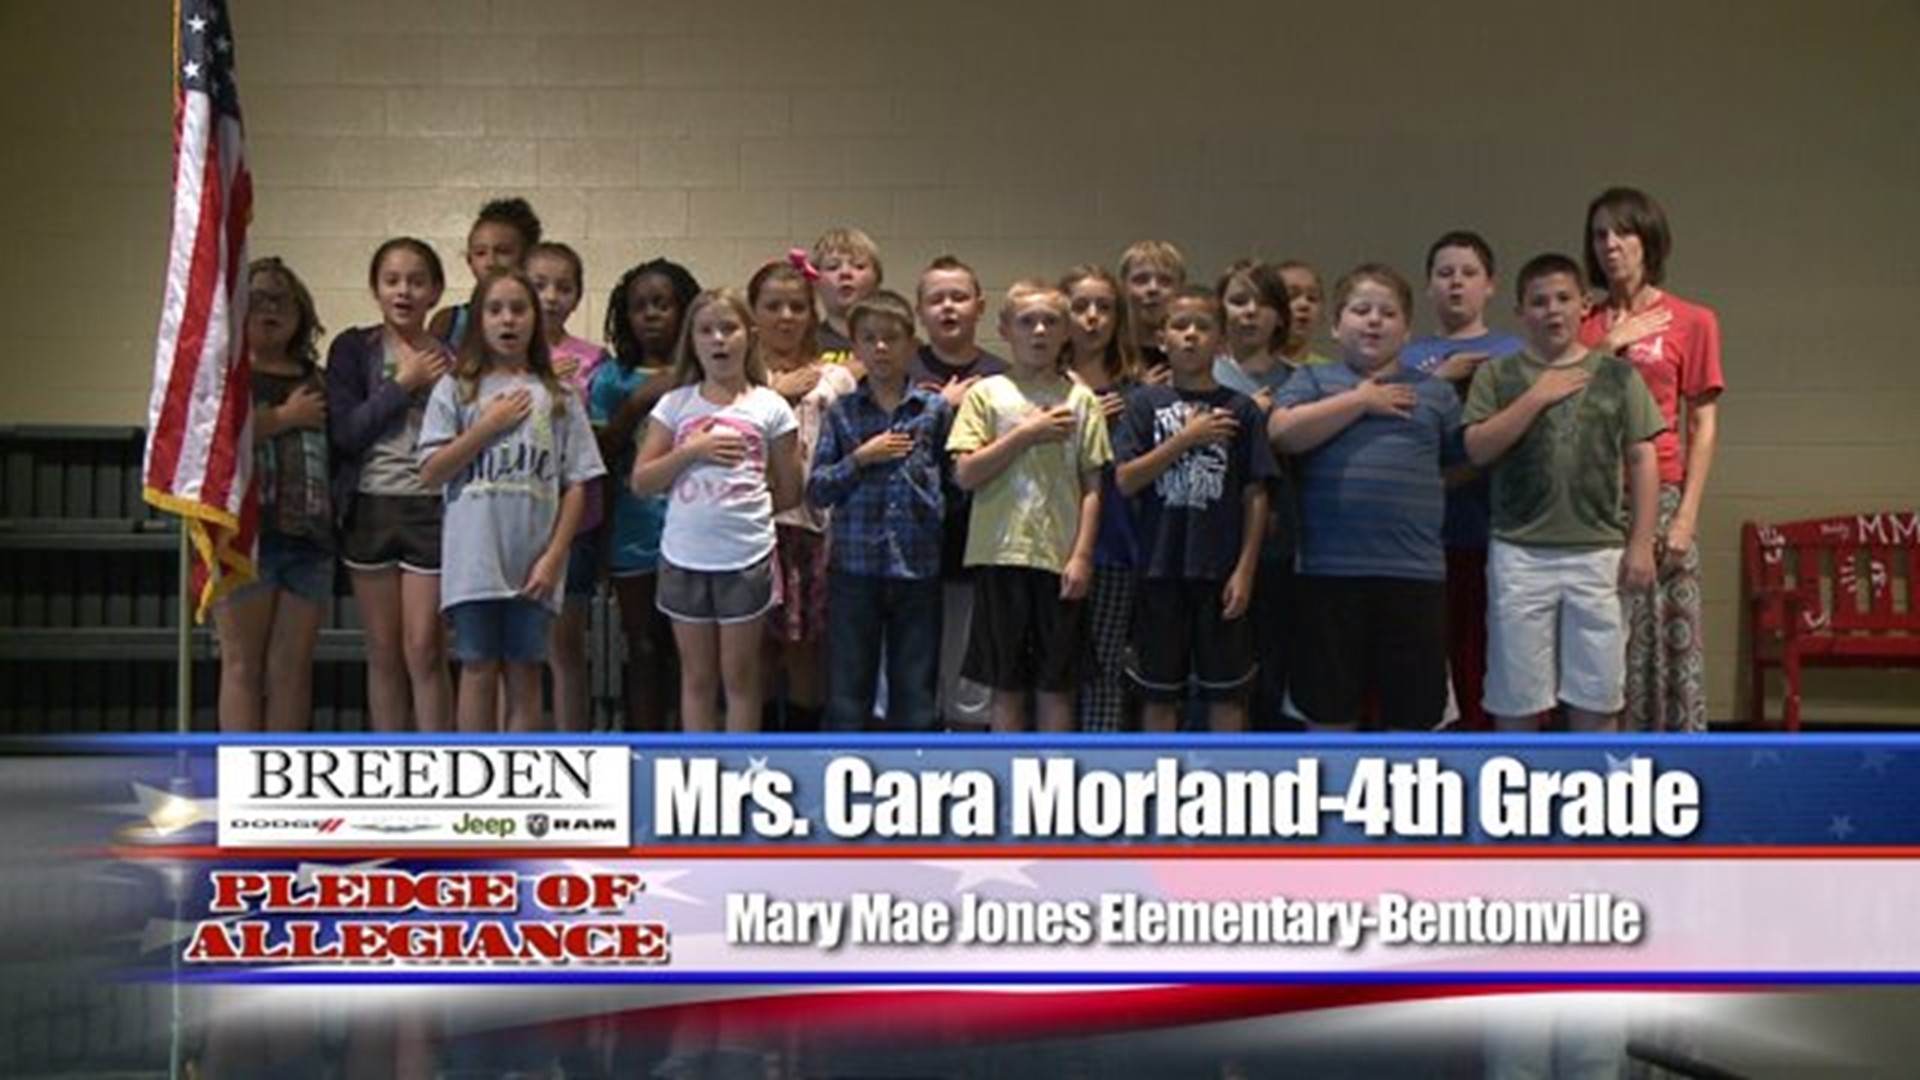 Mary Mae Jones Elementary - Bentonville - Mrs. Cara Morland - 4th Grade